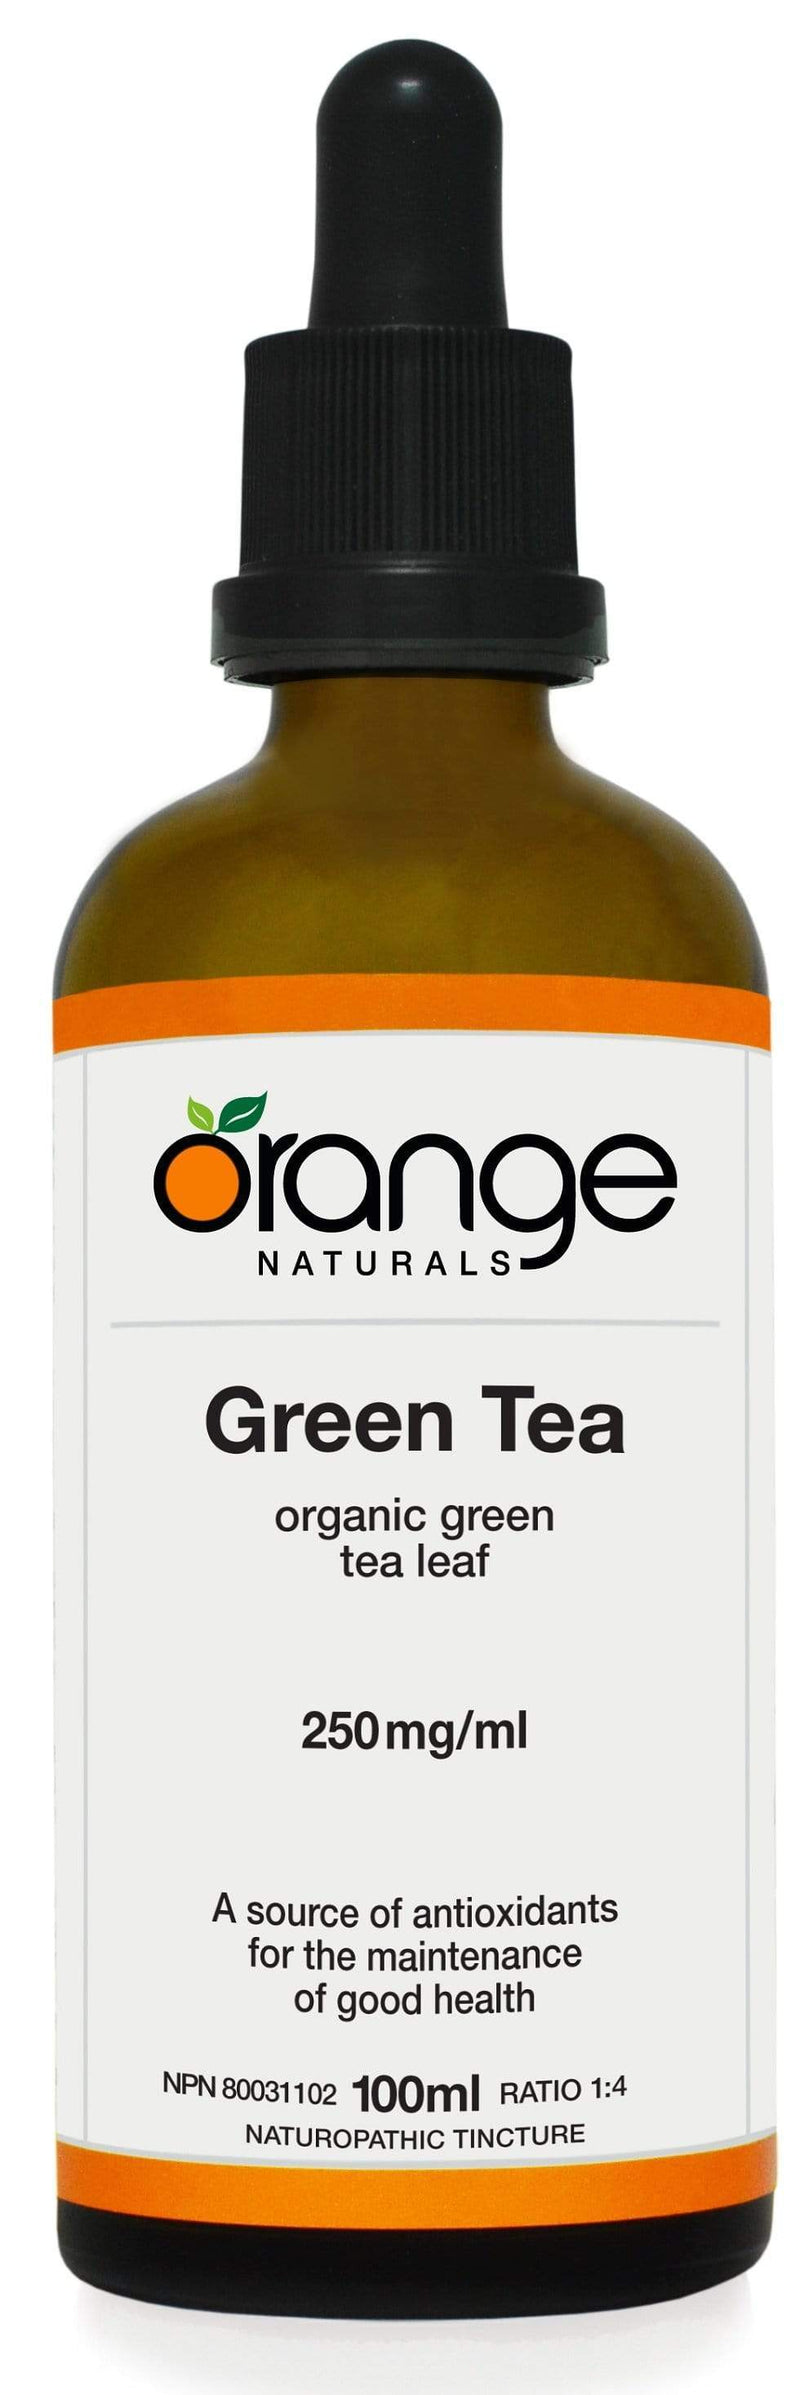 Orange Naturals Green Tea